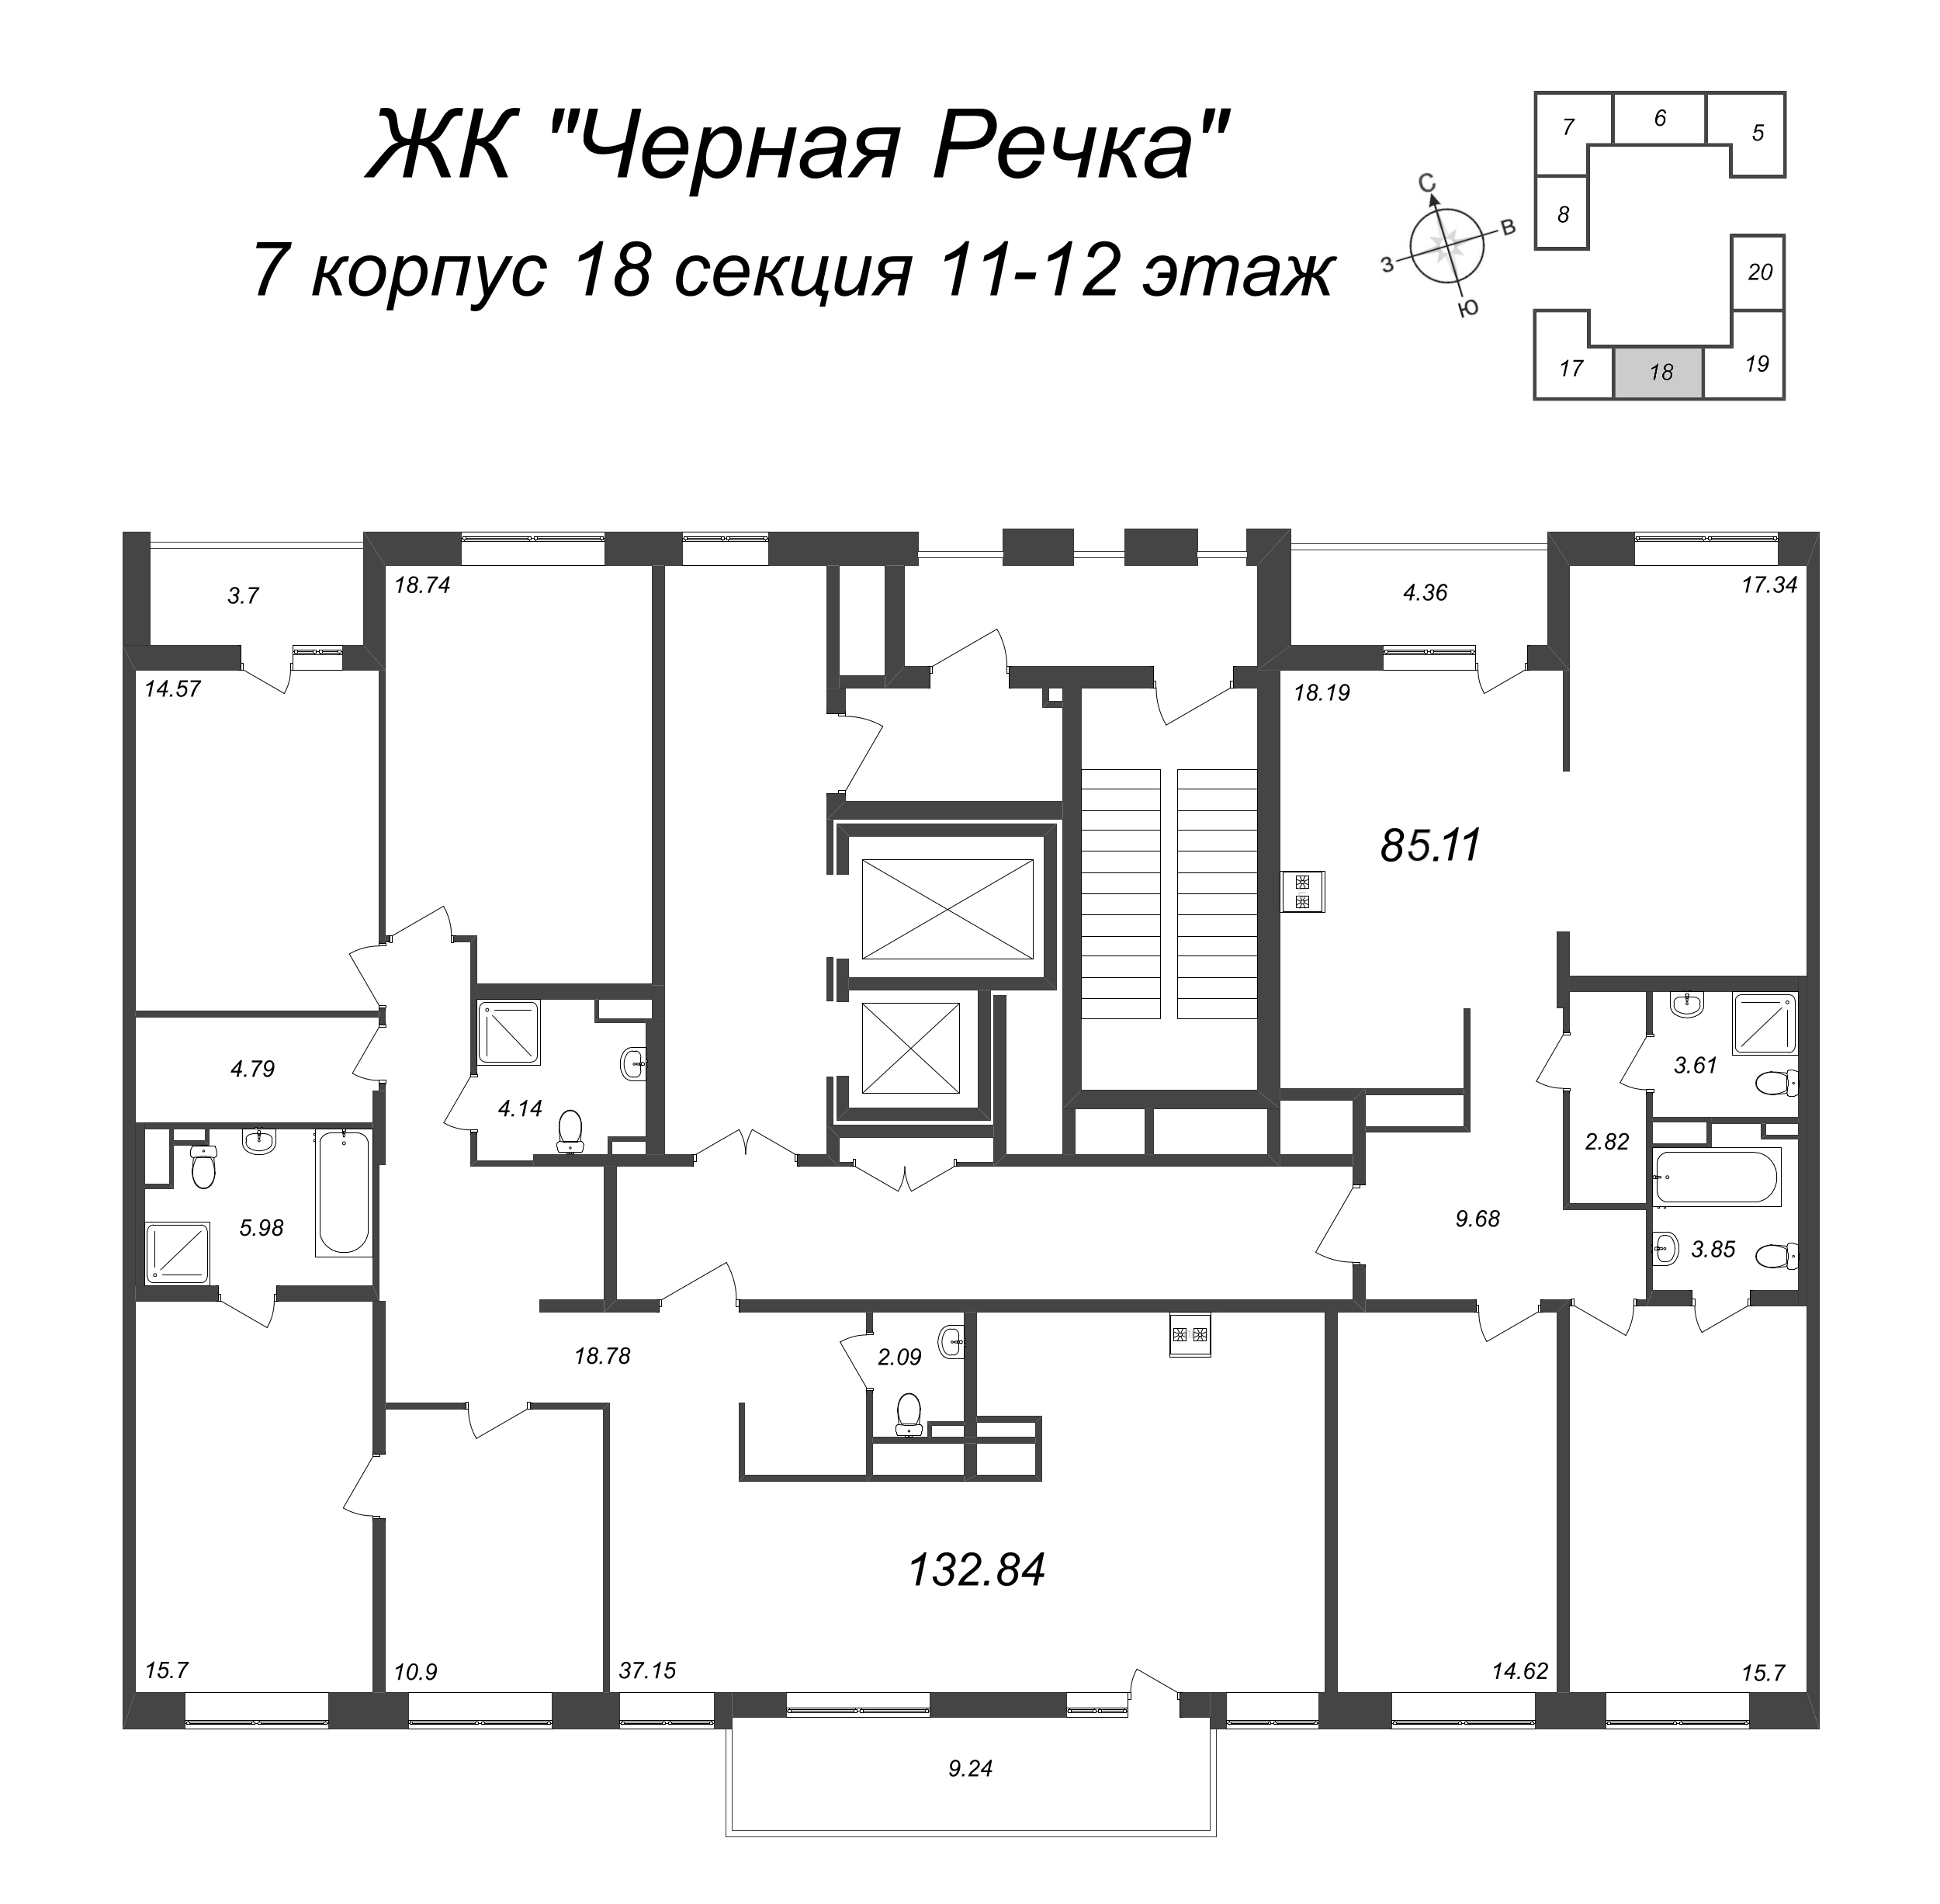 3-комнатная (Евро) квартира, 81.34 м² - планировка этажа